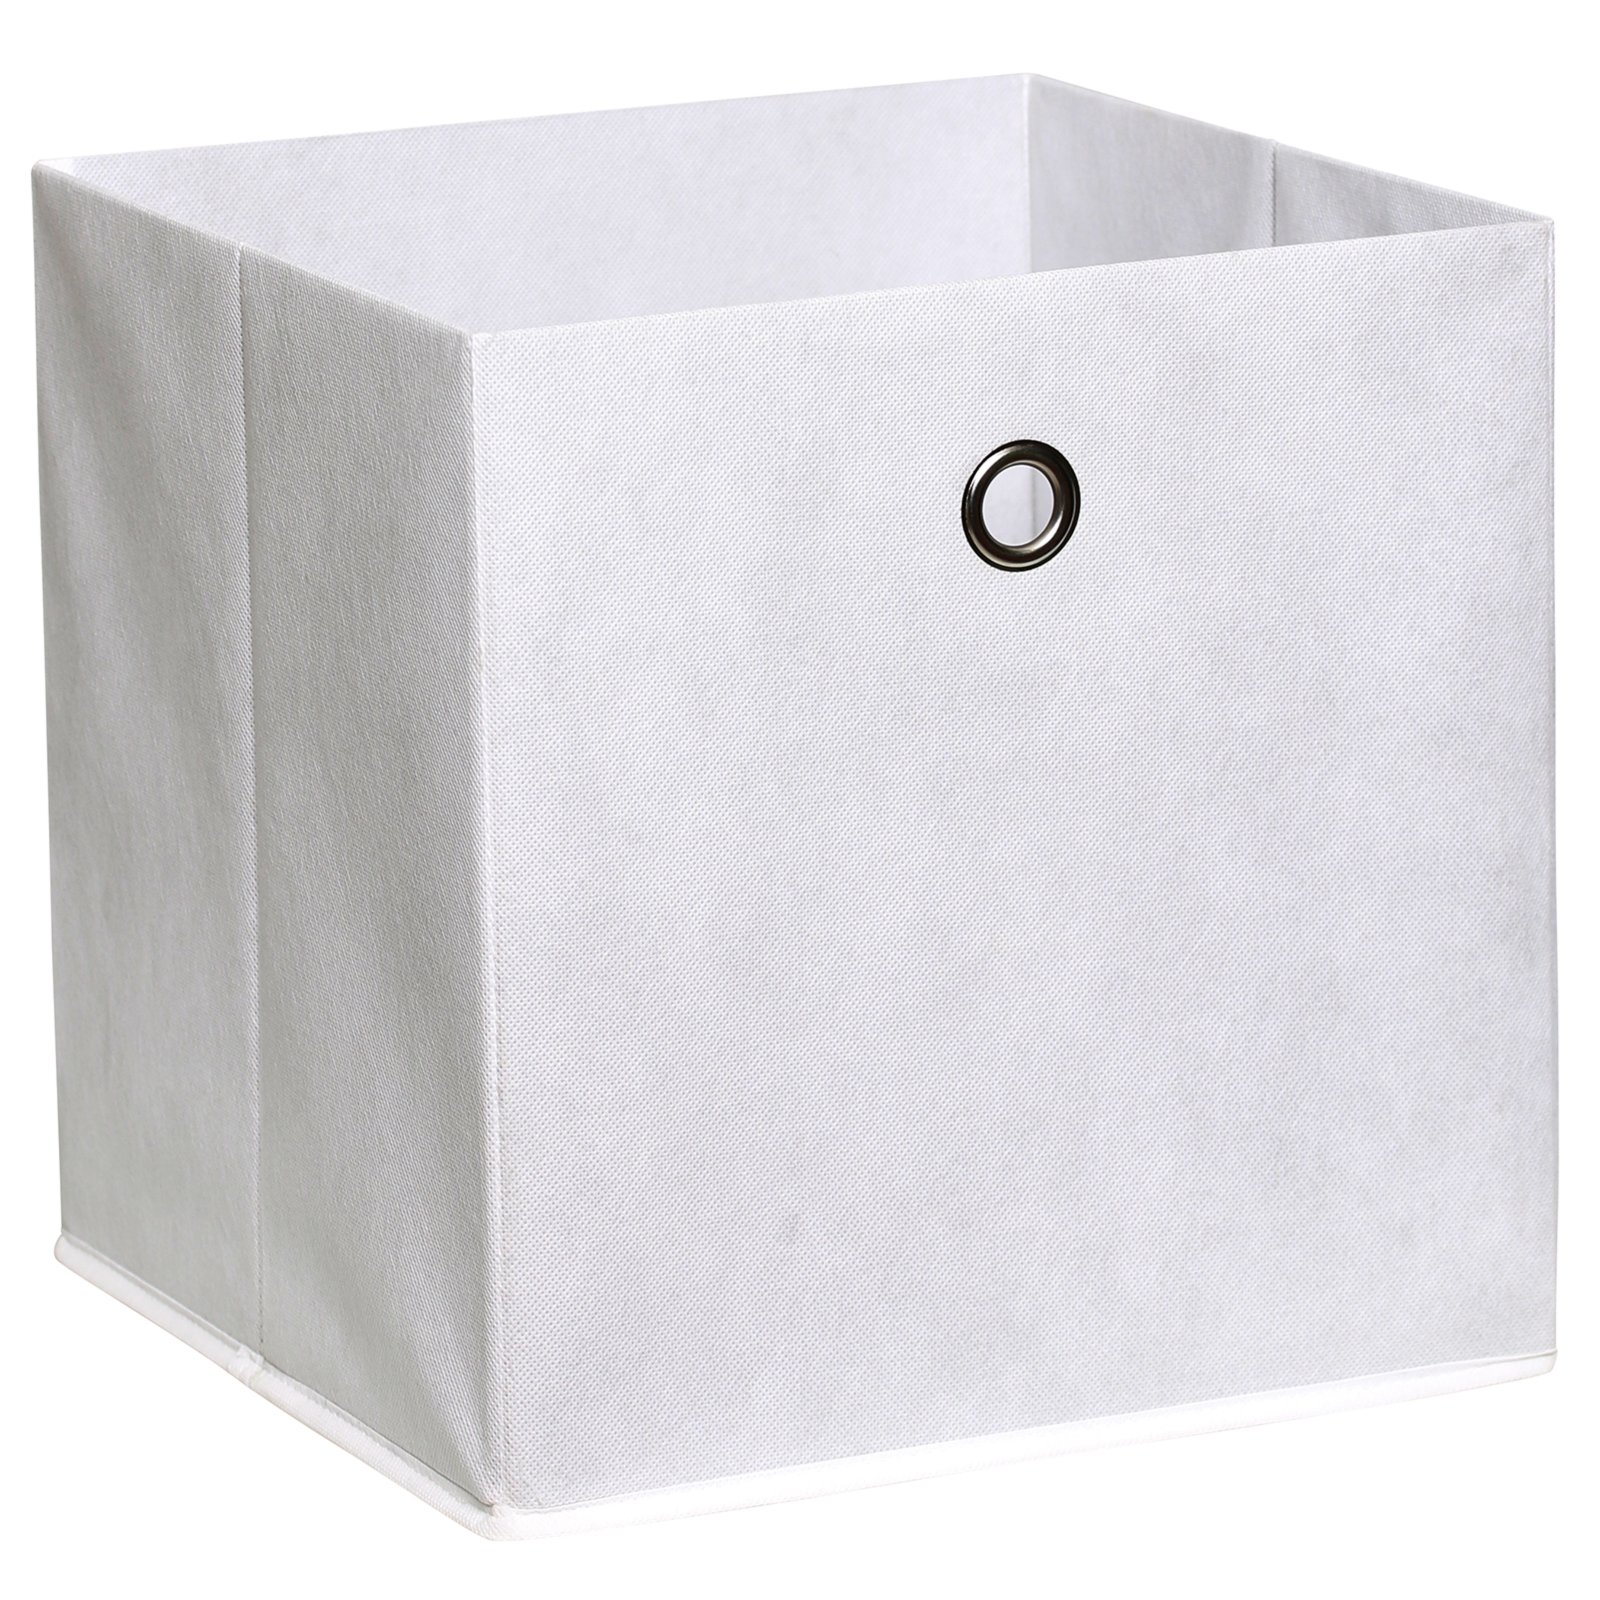 2 Stück weiß Faltbox 25 x 25 x 25 cm